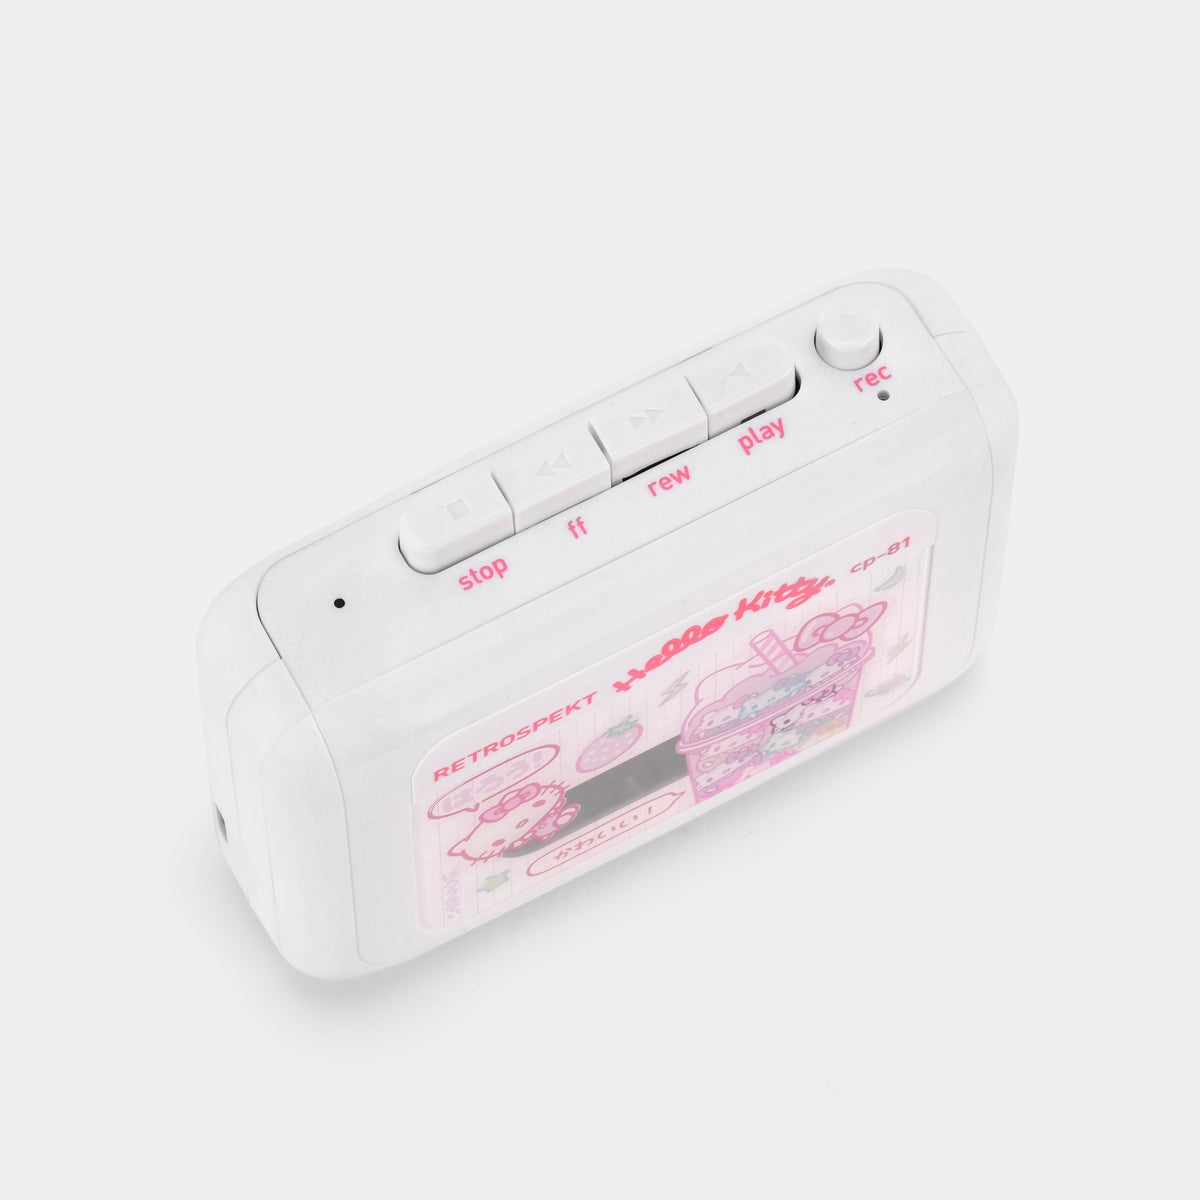 Hello Kitty Strawberry Milk CP-81 Portable Cassette Player Electronic RETROSPEKT   